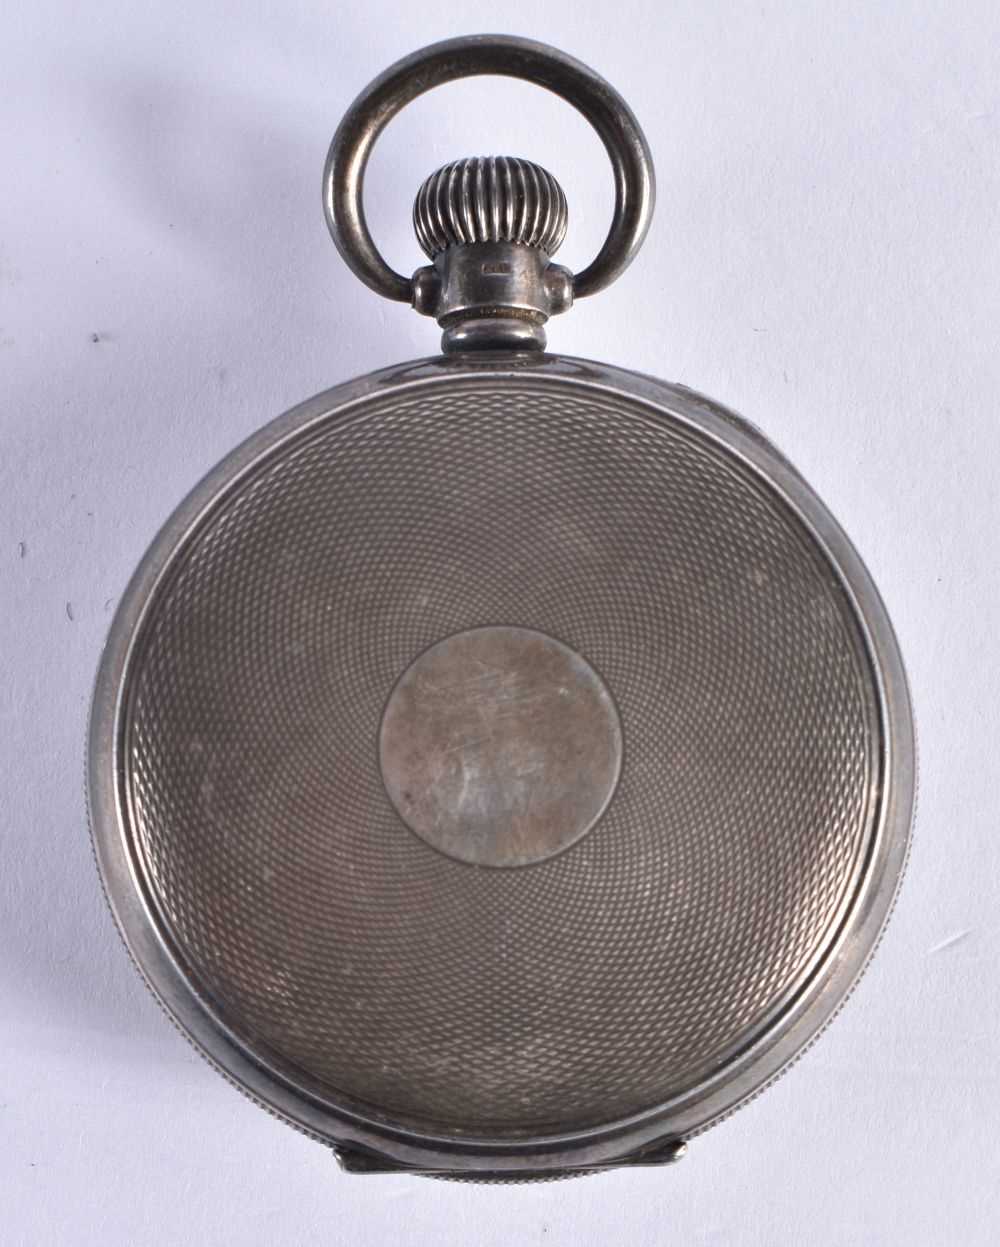 SMITHS Silver Gents Open Face Pocket Watch.  Hallmarked Birmingham 1947.  Movement - Hand-wind. - Image 5 of 5